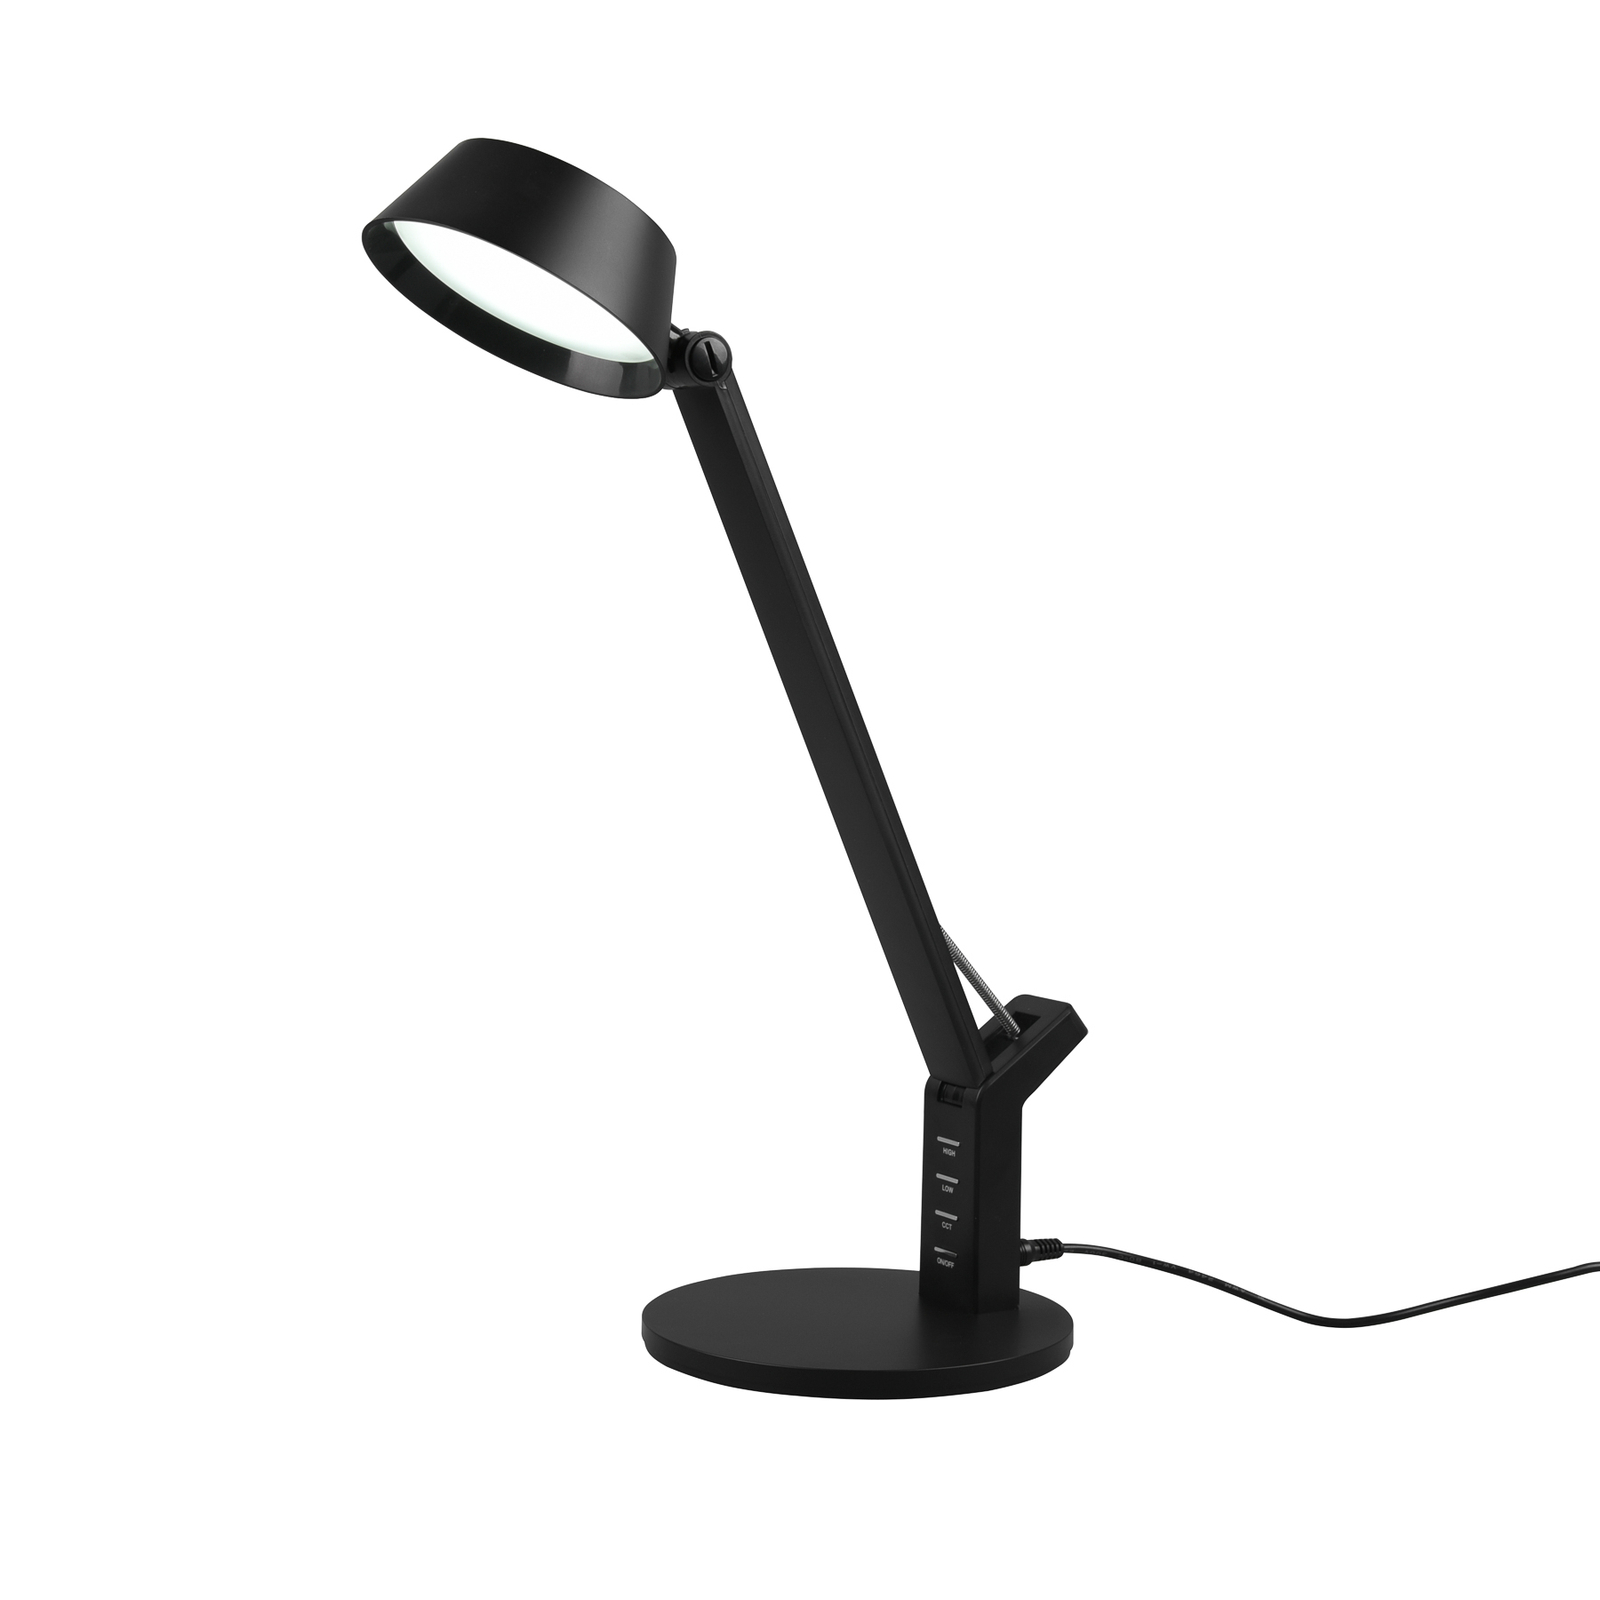 LED tafellamp Ava met dimfunctie, zwart